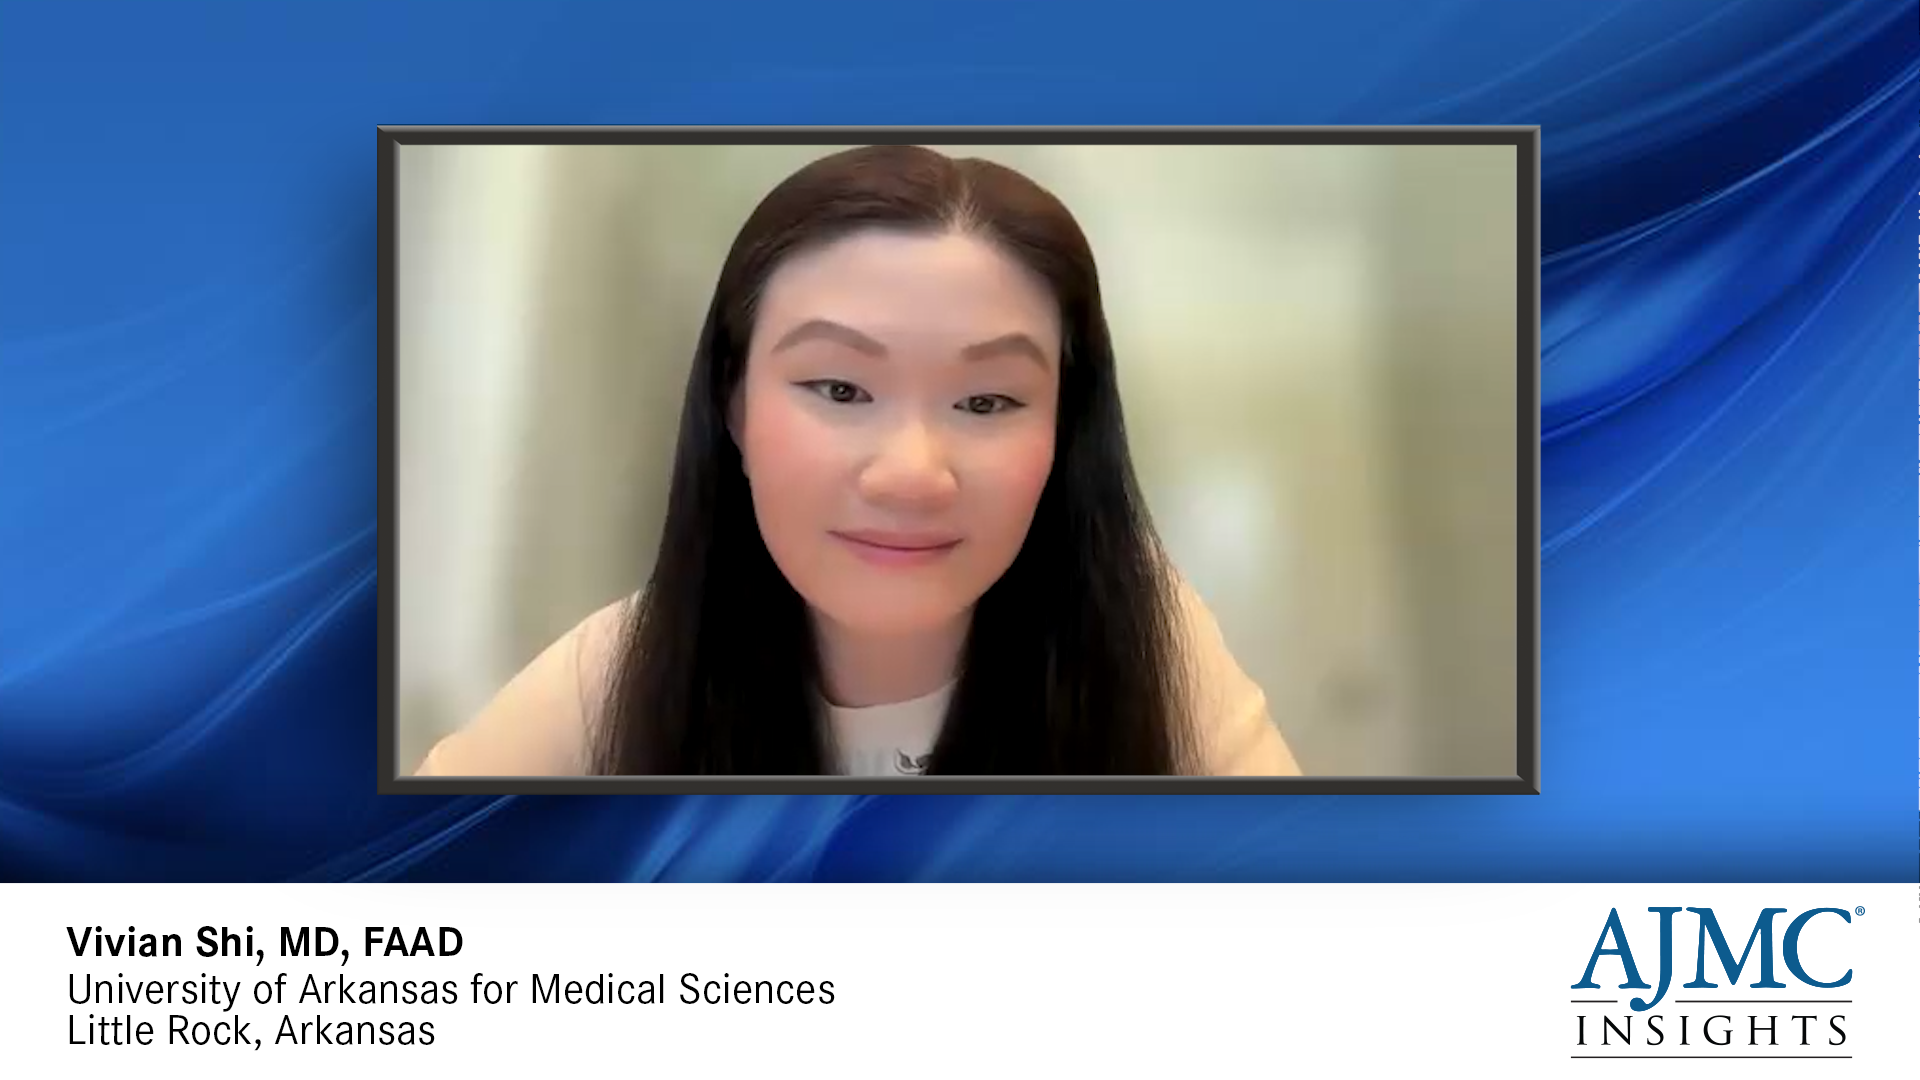 Vivian Shi, MD, FAAD, an expert on hidradenitis suppurativa